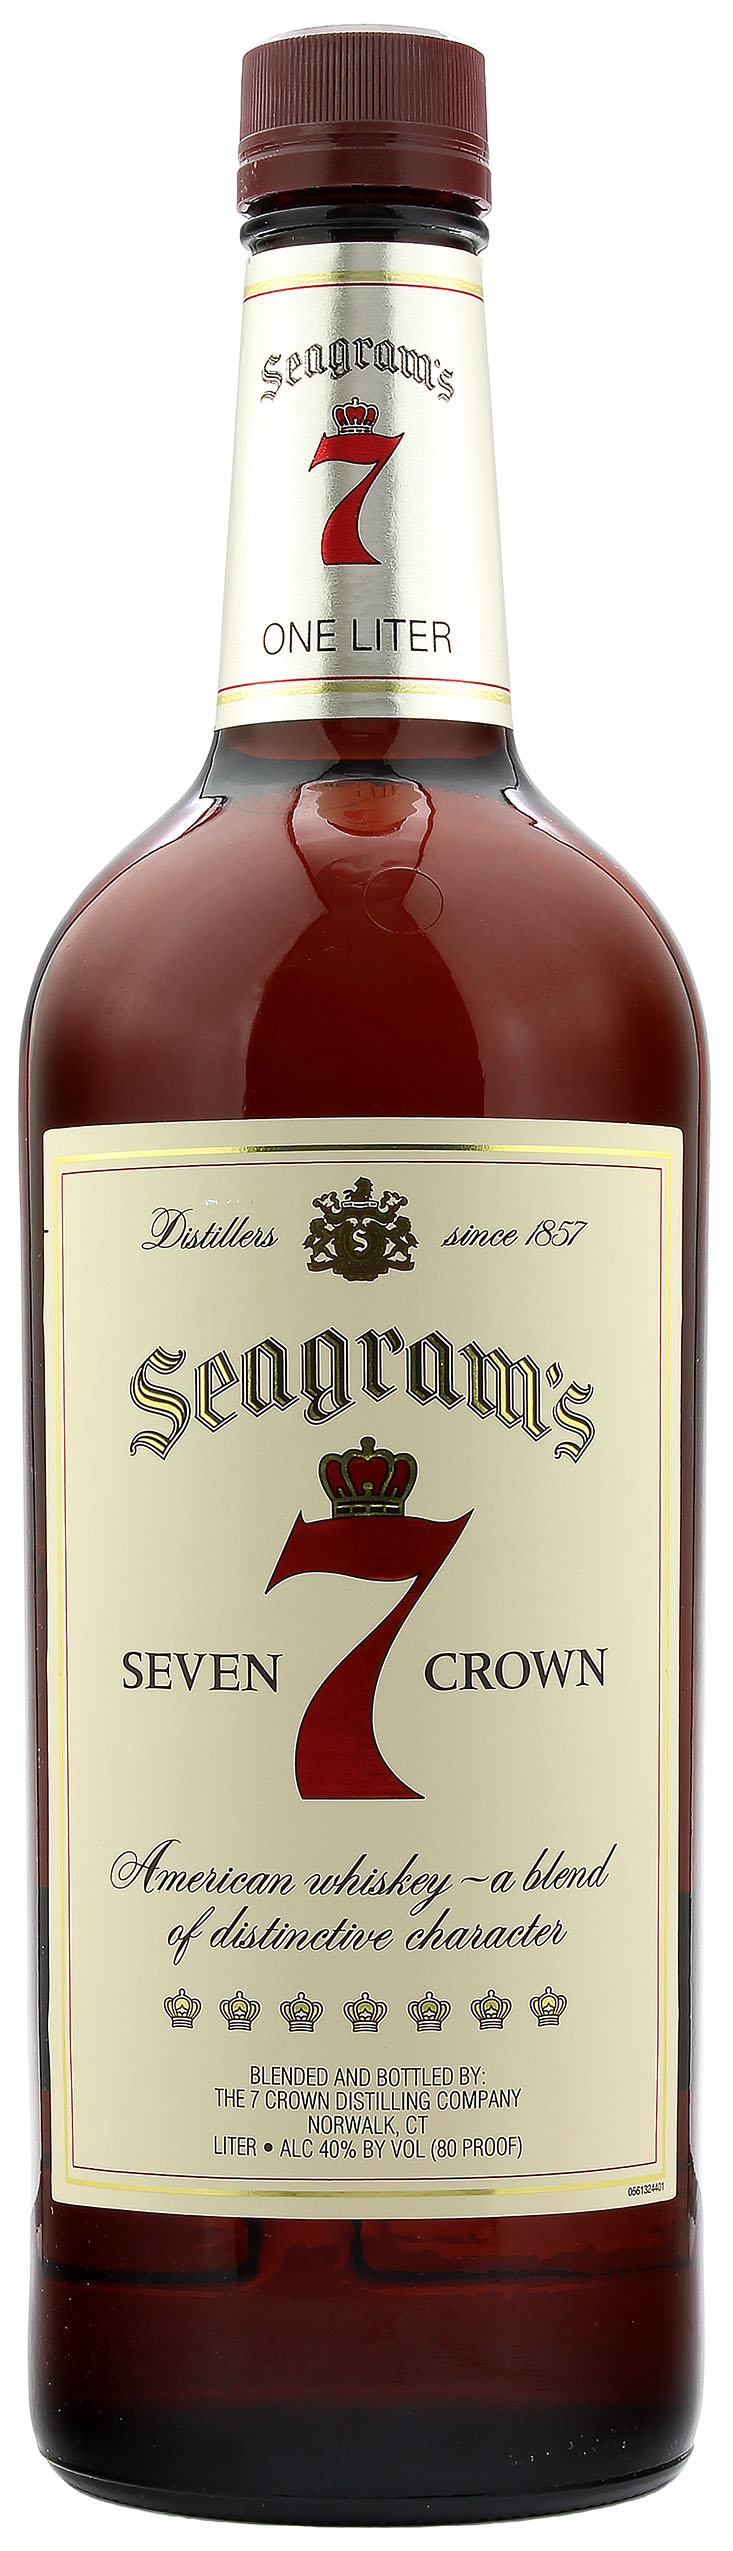 Seagram's 7 Crown American Blended Whiskey 40.0% 1 Liter